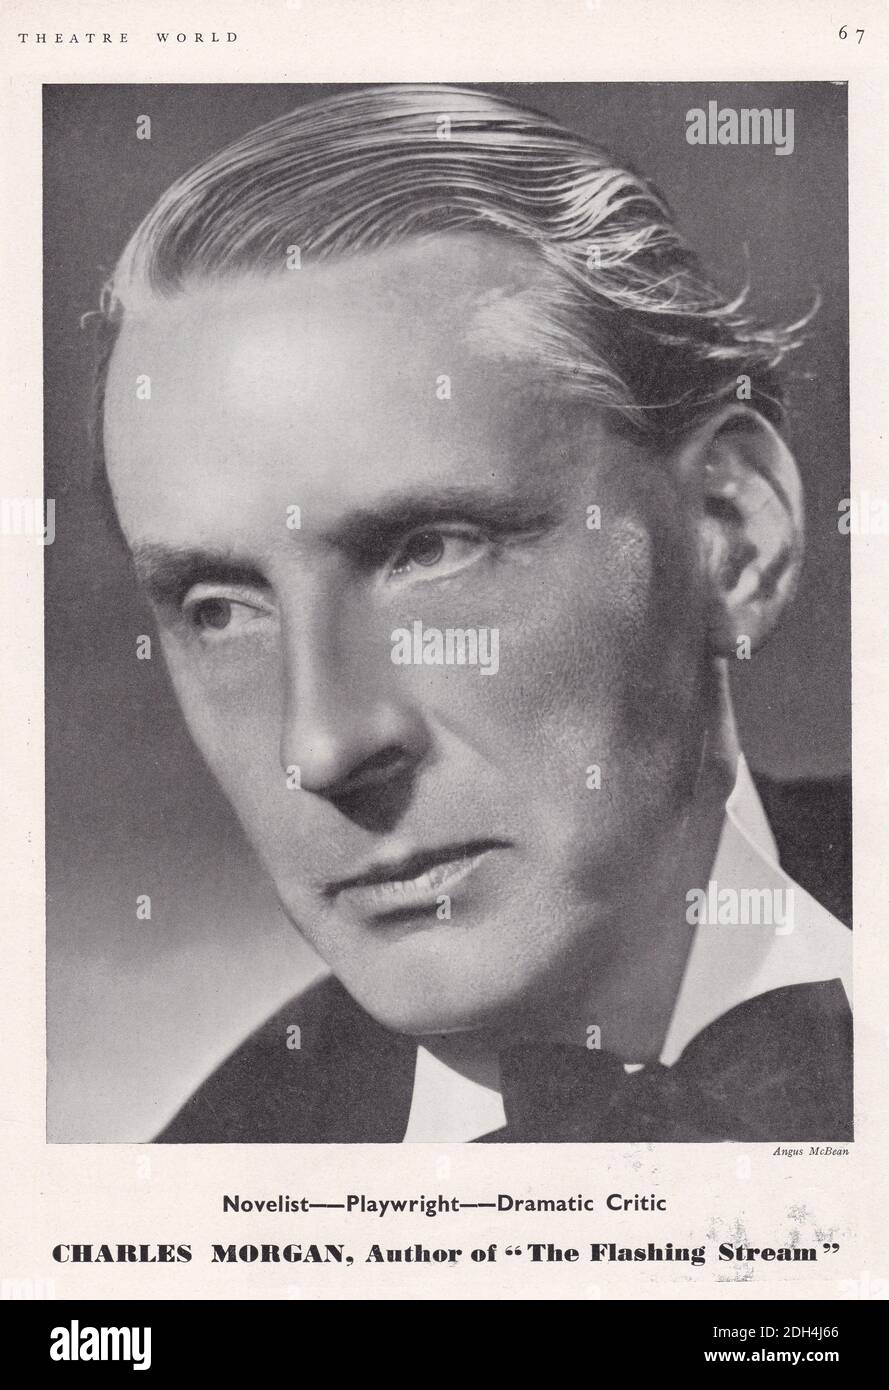 Charles Langbridge Morgan - Author of 'The Flashing Stream' - a British playwright and novelist. Stock Photo